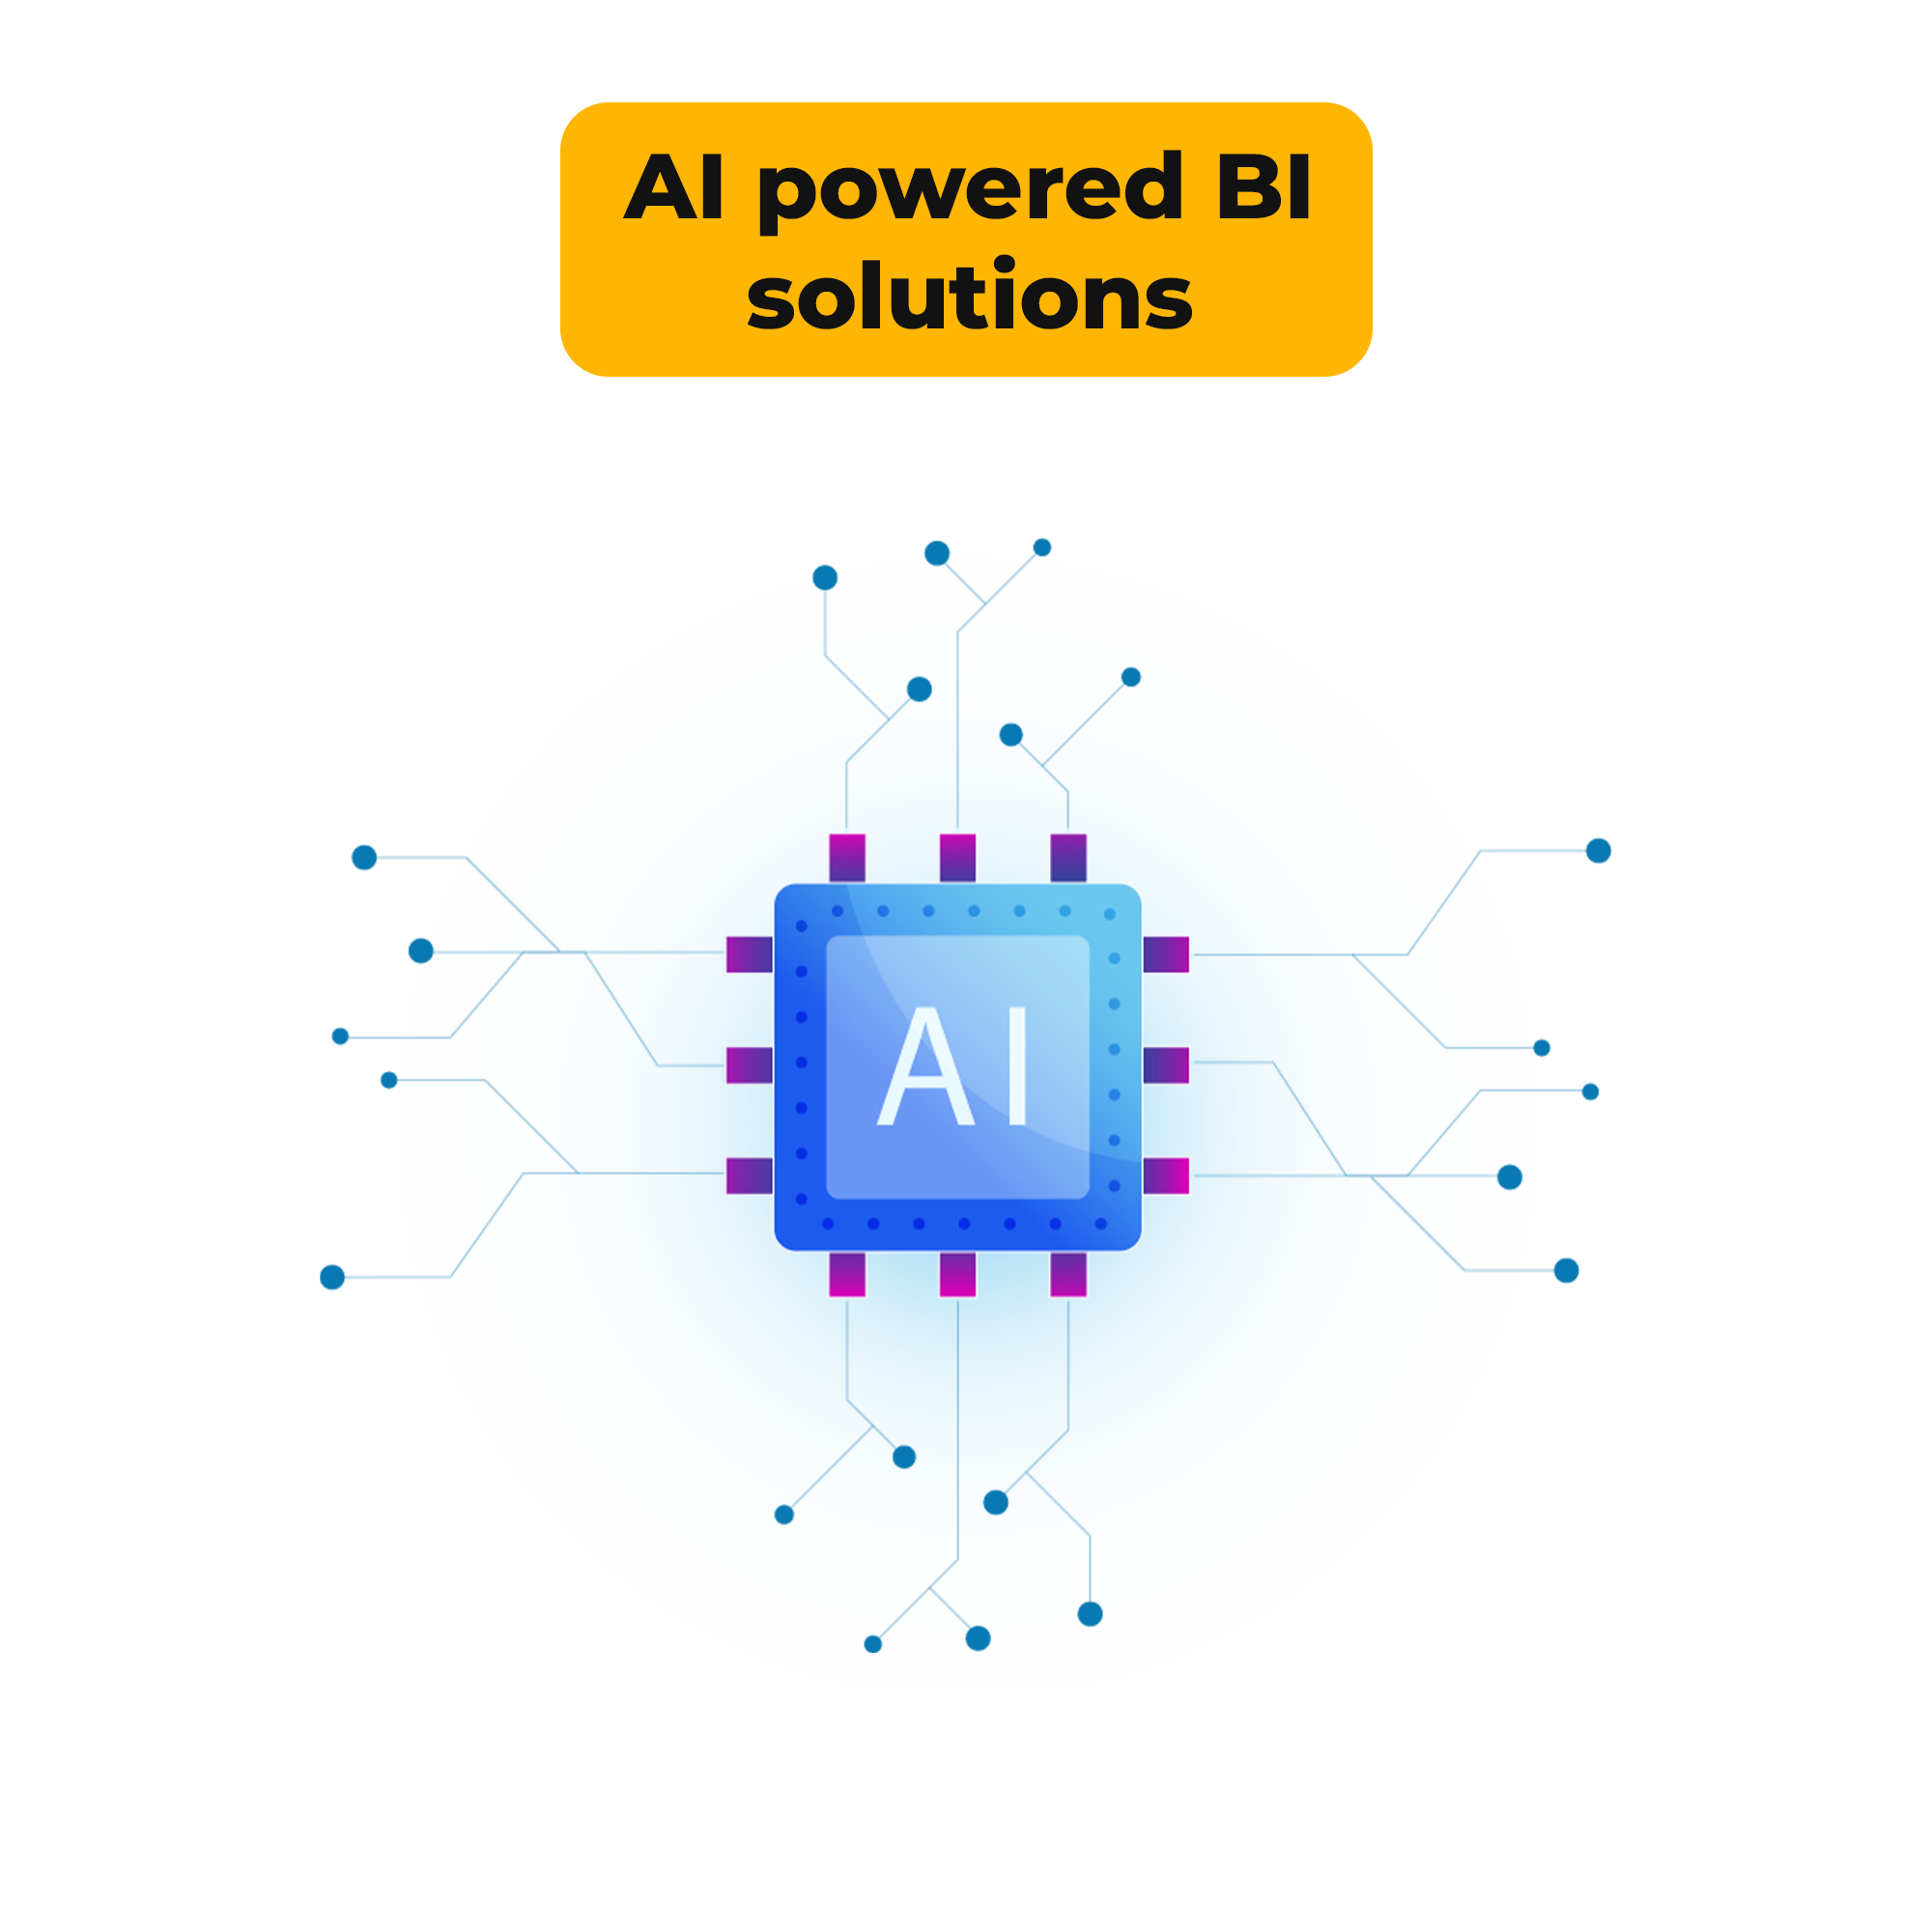 AI powered BI solutions